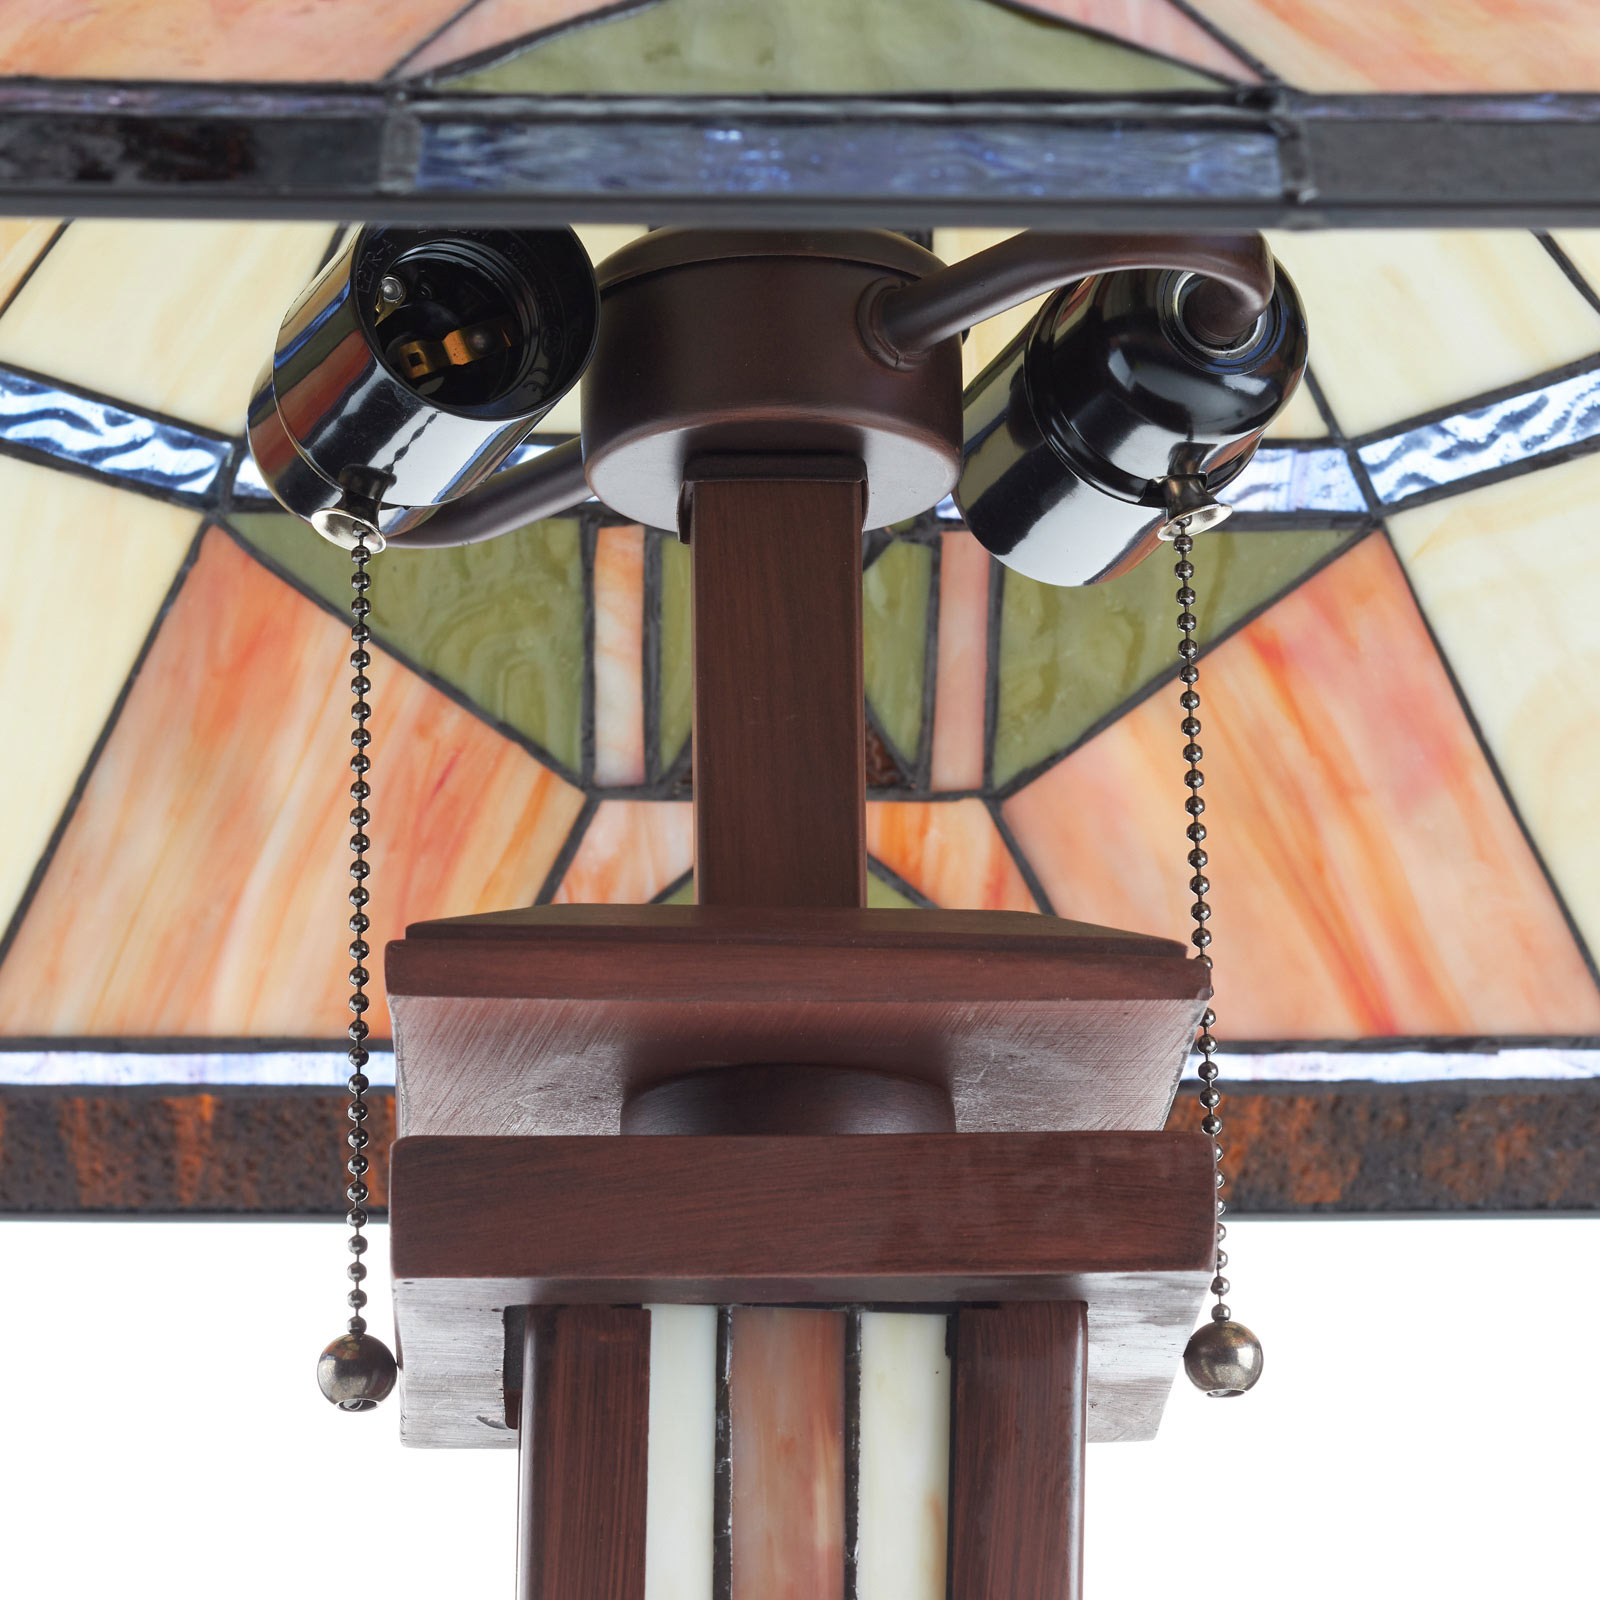 Tafellamp Leondra in Tiffany stijl